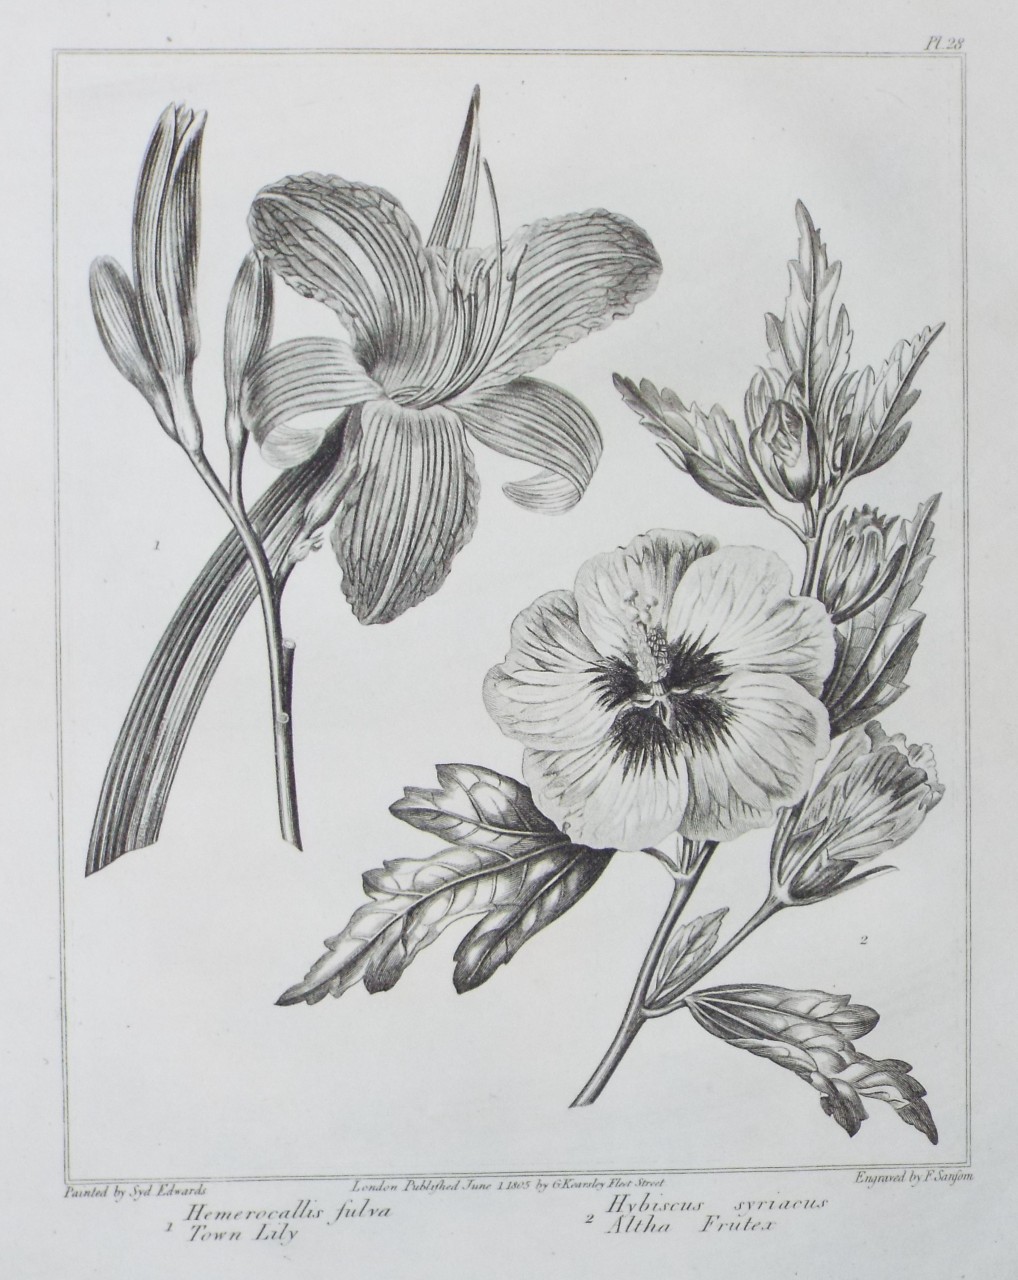 Print - 1 Hemerocallis fulva Town Lily | 2 Hibiscus syriacus Altha Frutex - Sansom